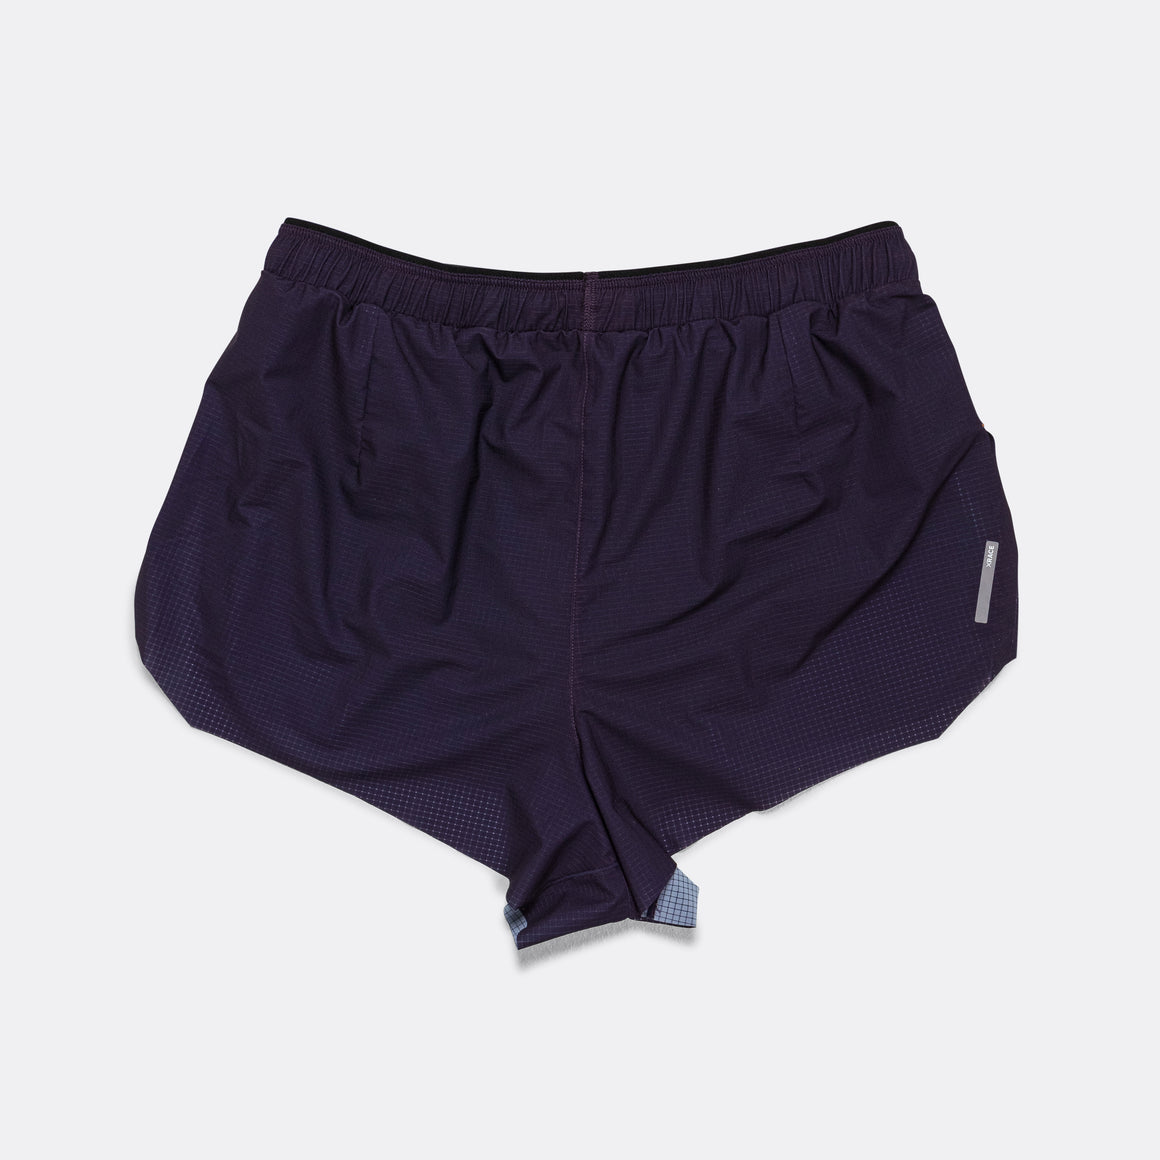 Mens Race Shorts - Purple